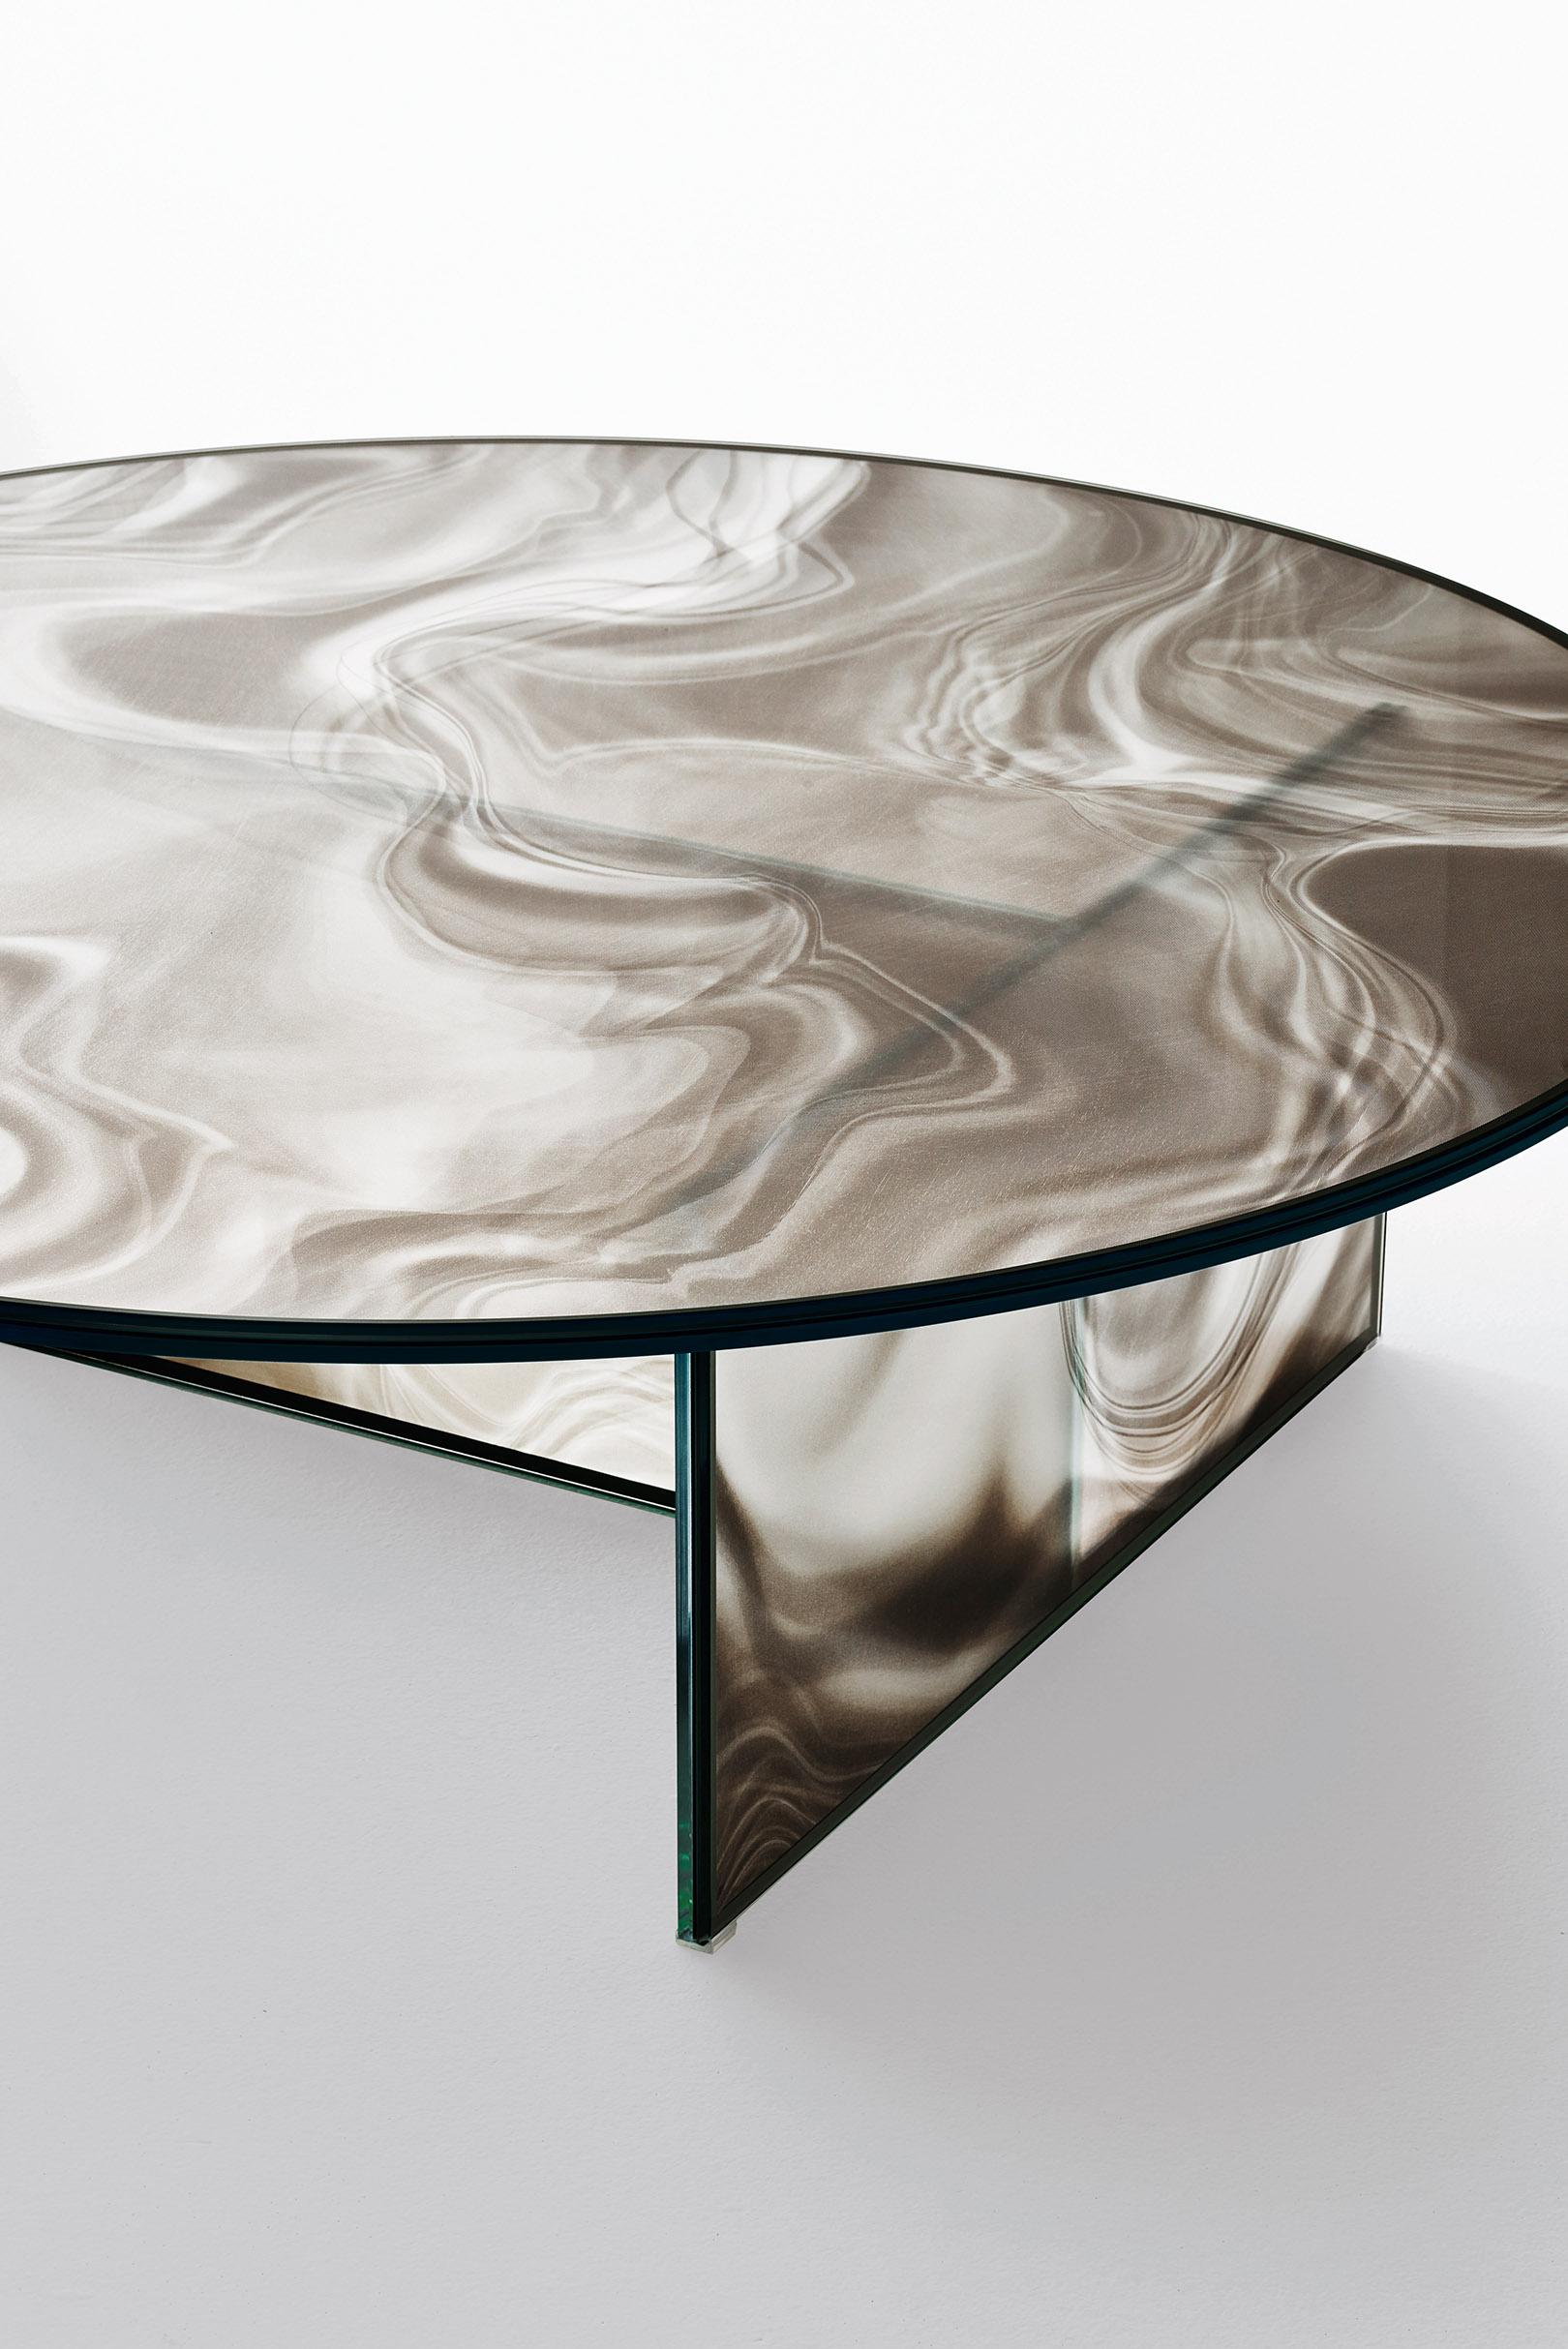 LIQUEFY Coffee Tables, by Patricia Urquiola for Glas Italia In New Condition For Sale In Macherio, IT